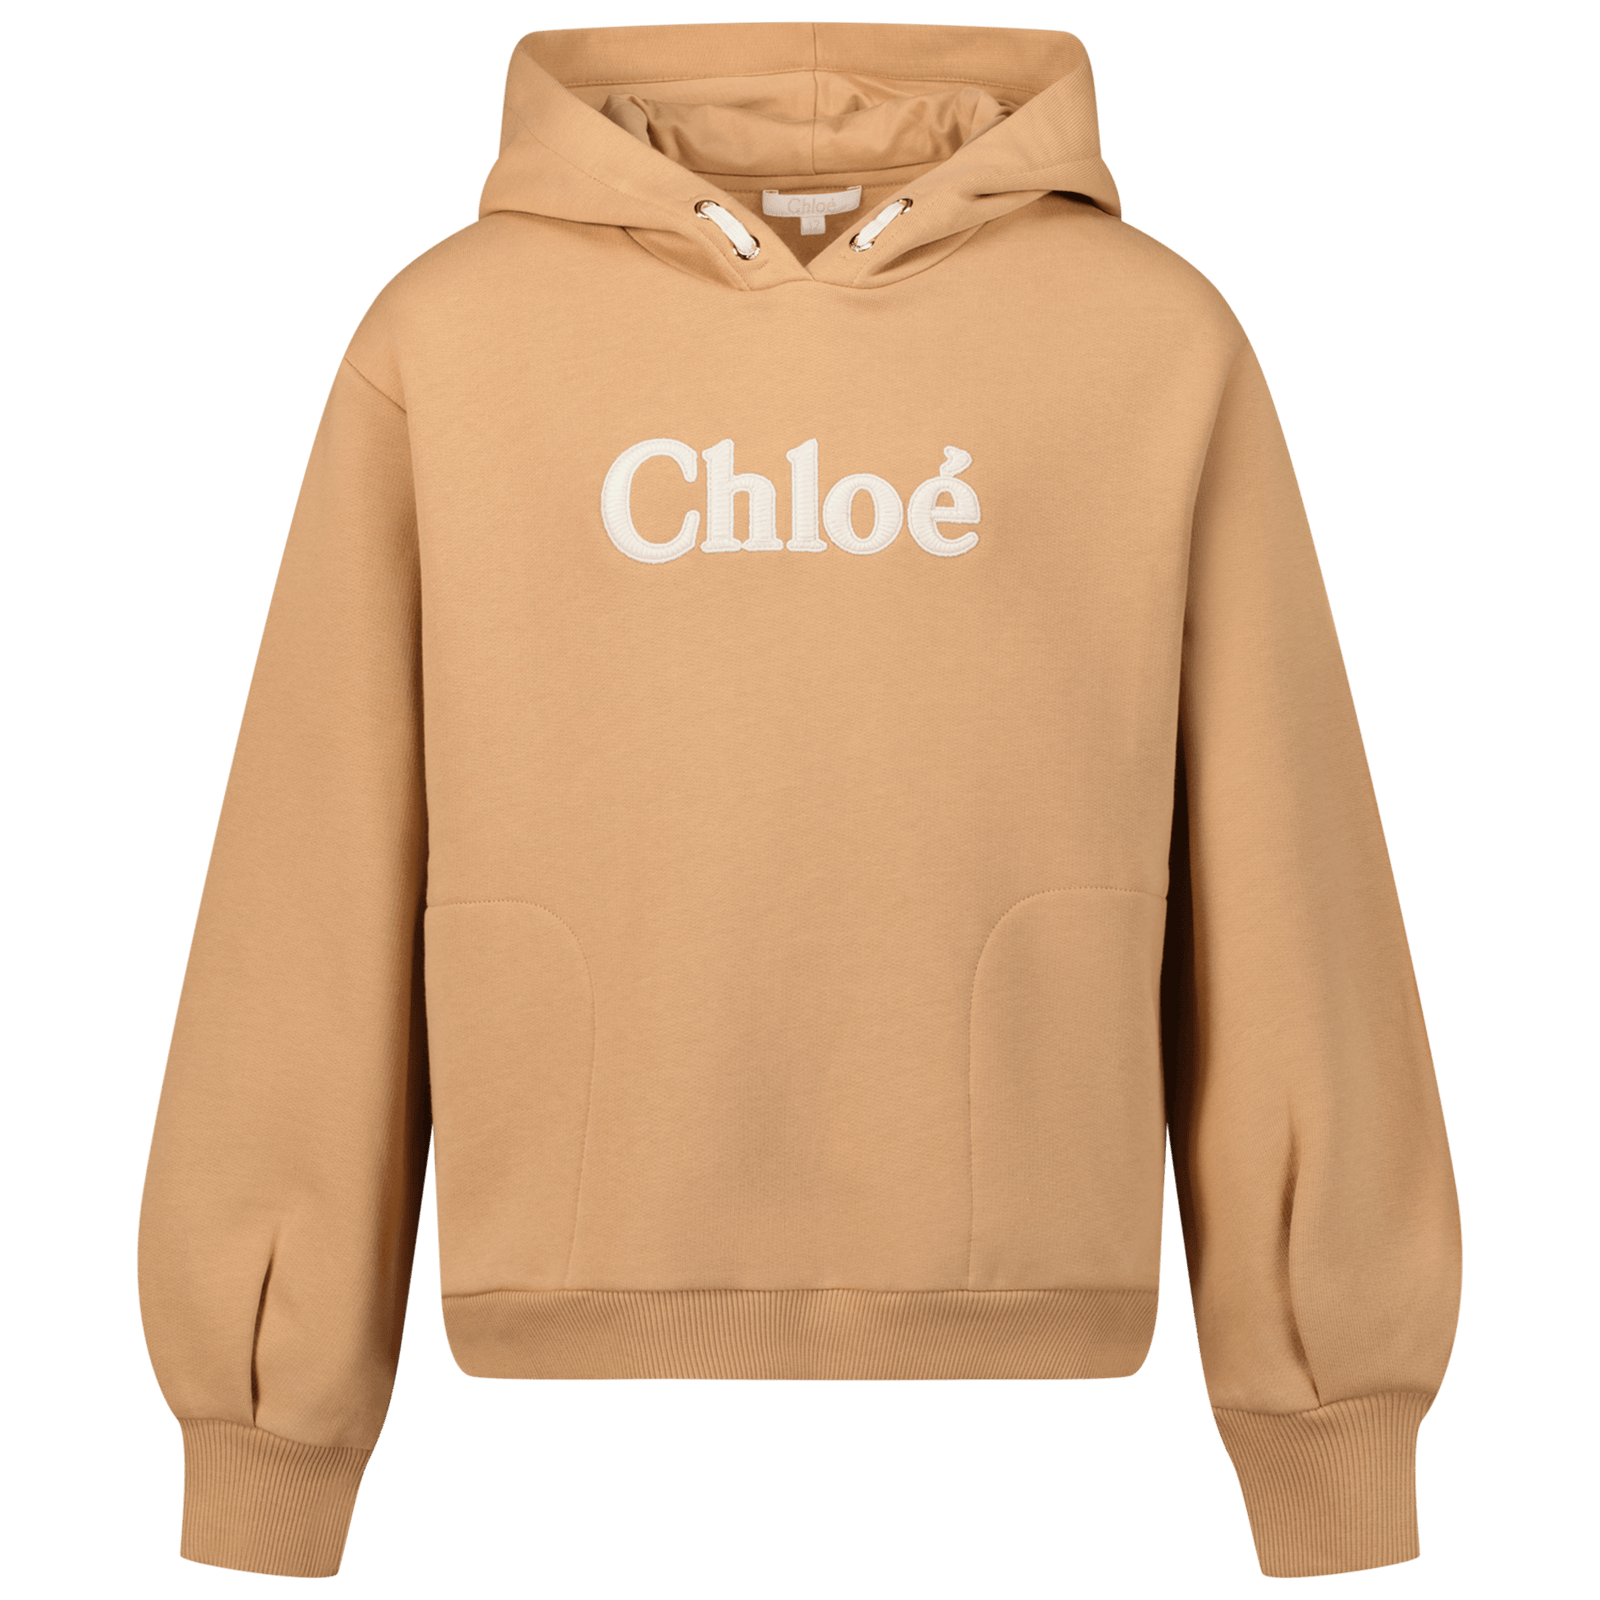 Chloe Kids Girls Sweater Camel